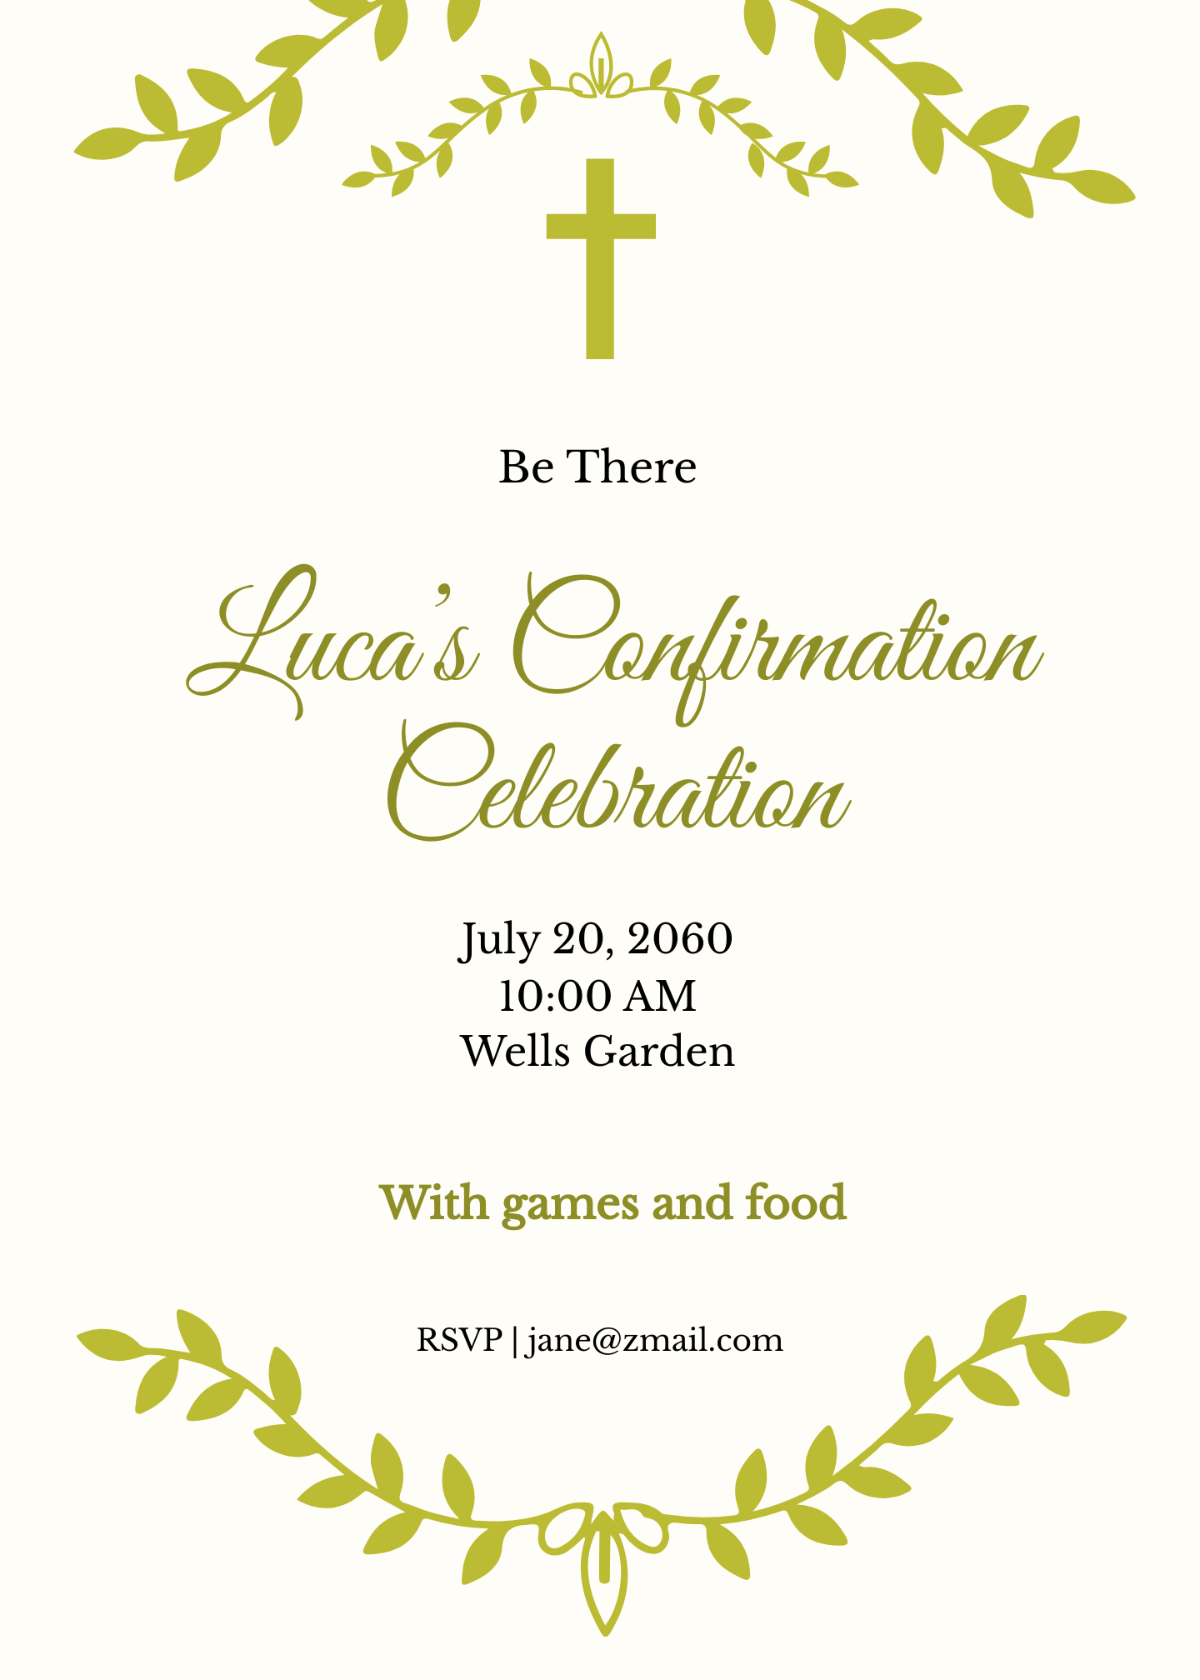 Confirmation Celebration Invitation Template